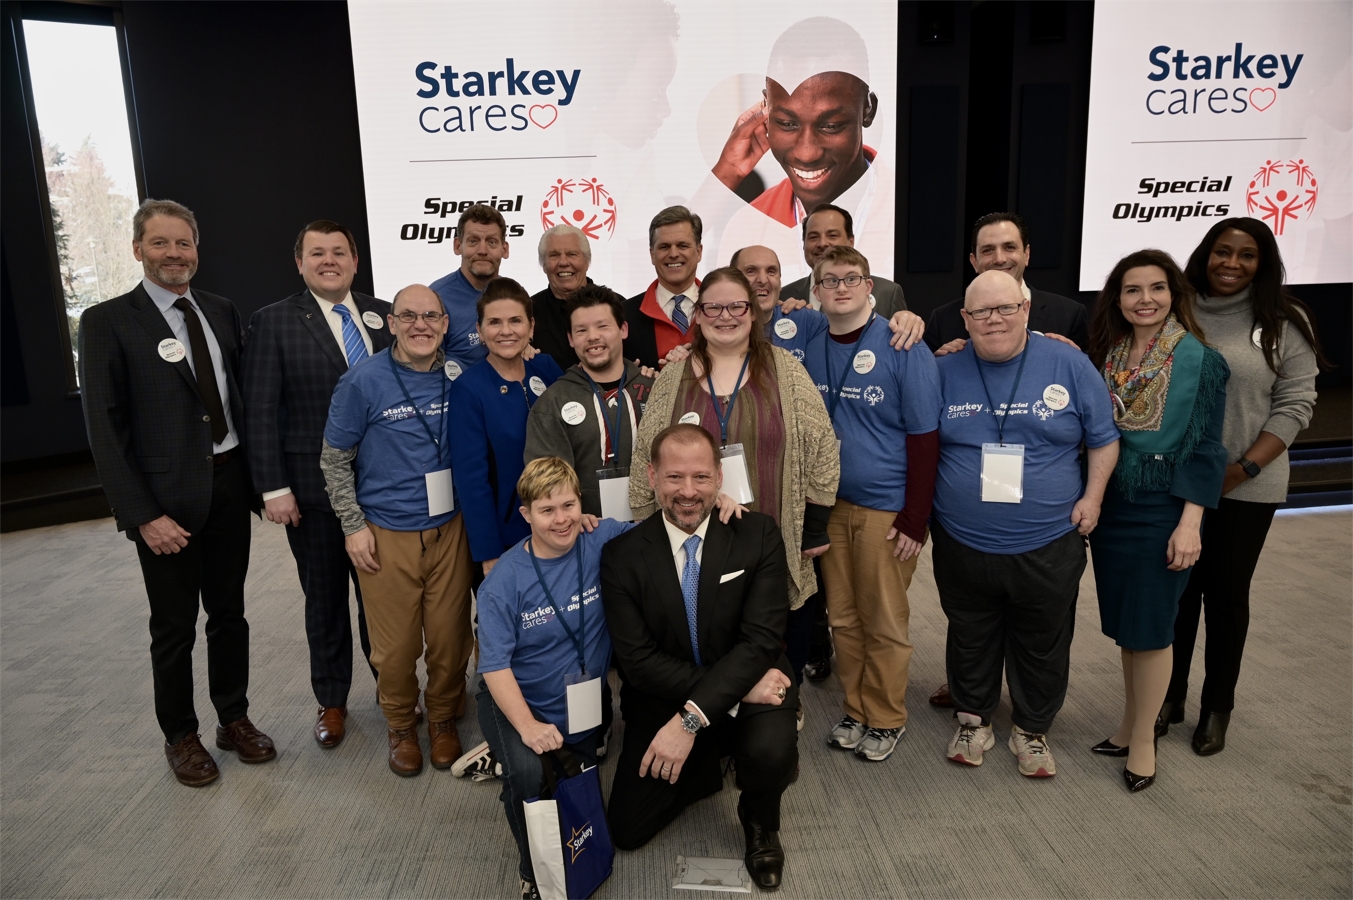 Starkey Cares provides hearing instruments to Special Olympics athletes